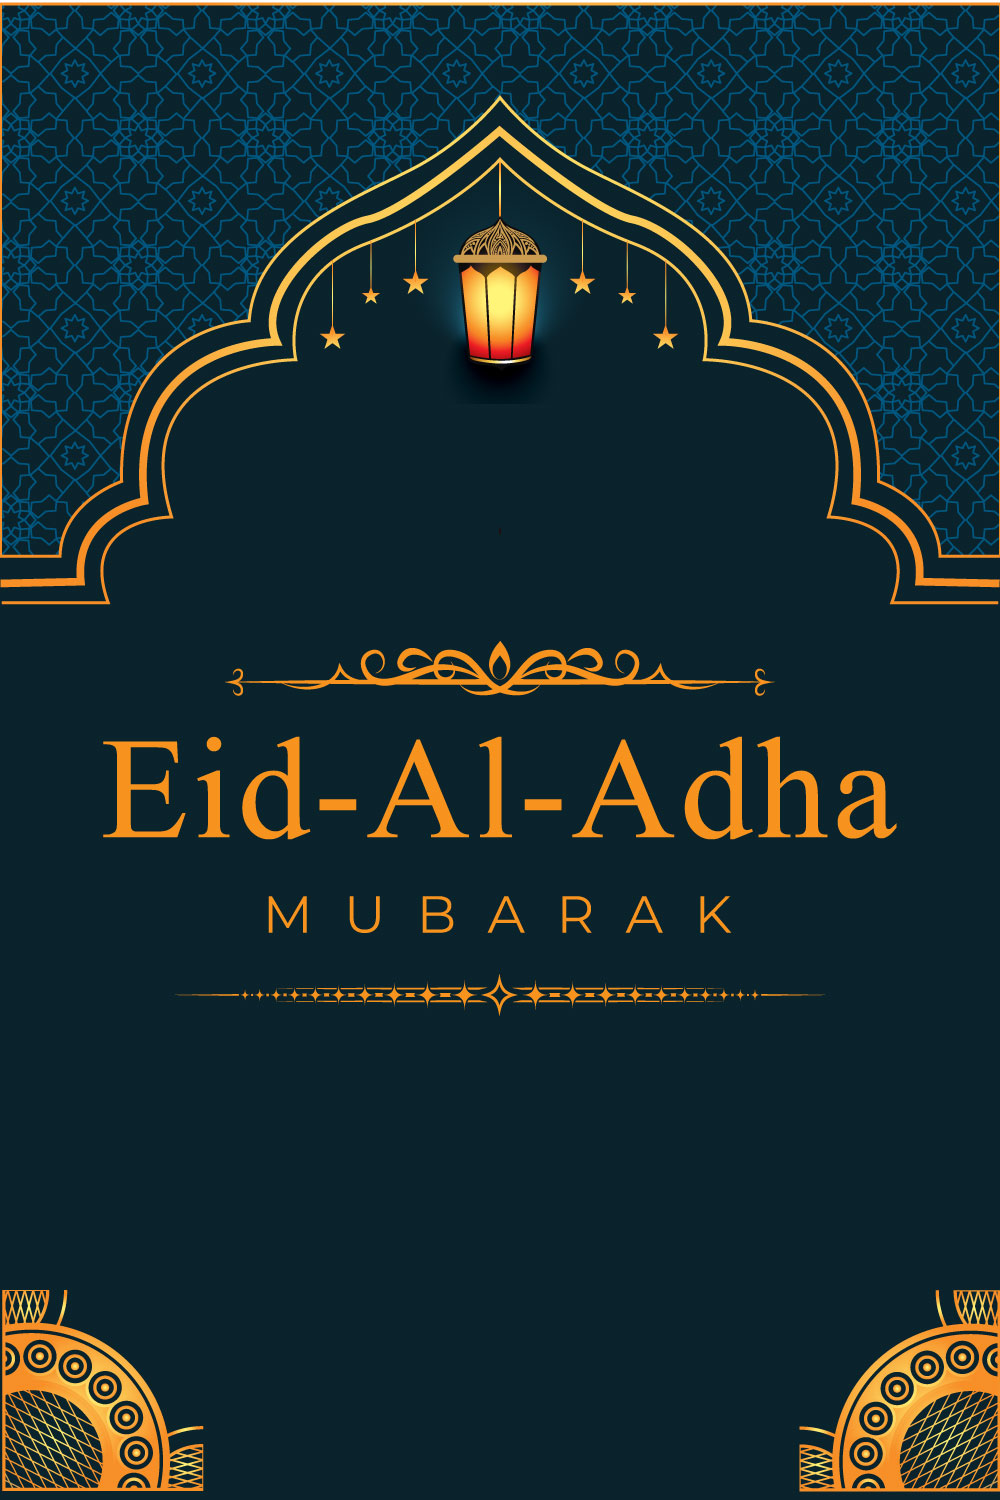 Eid Al Adha Social Media Poster Design pinterest preview image.